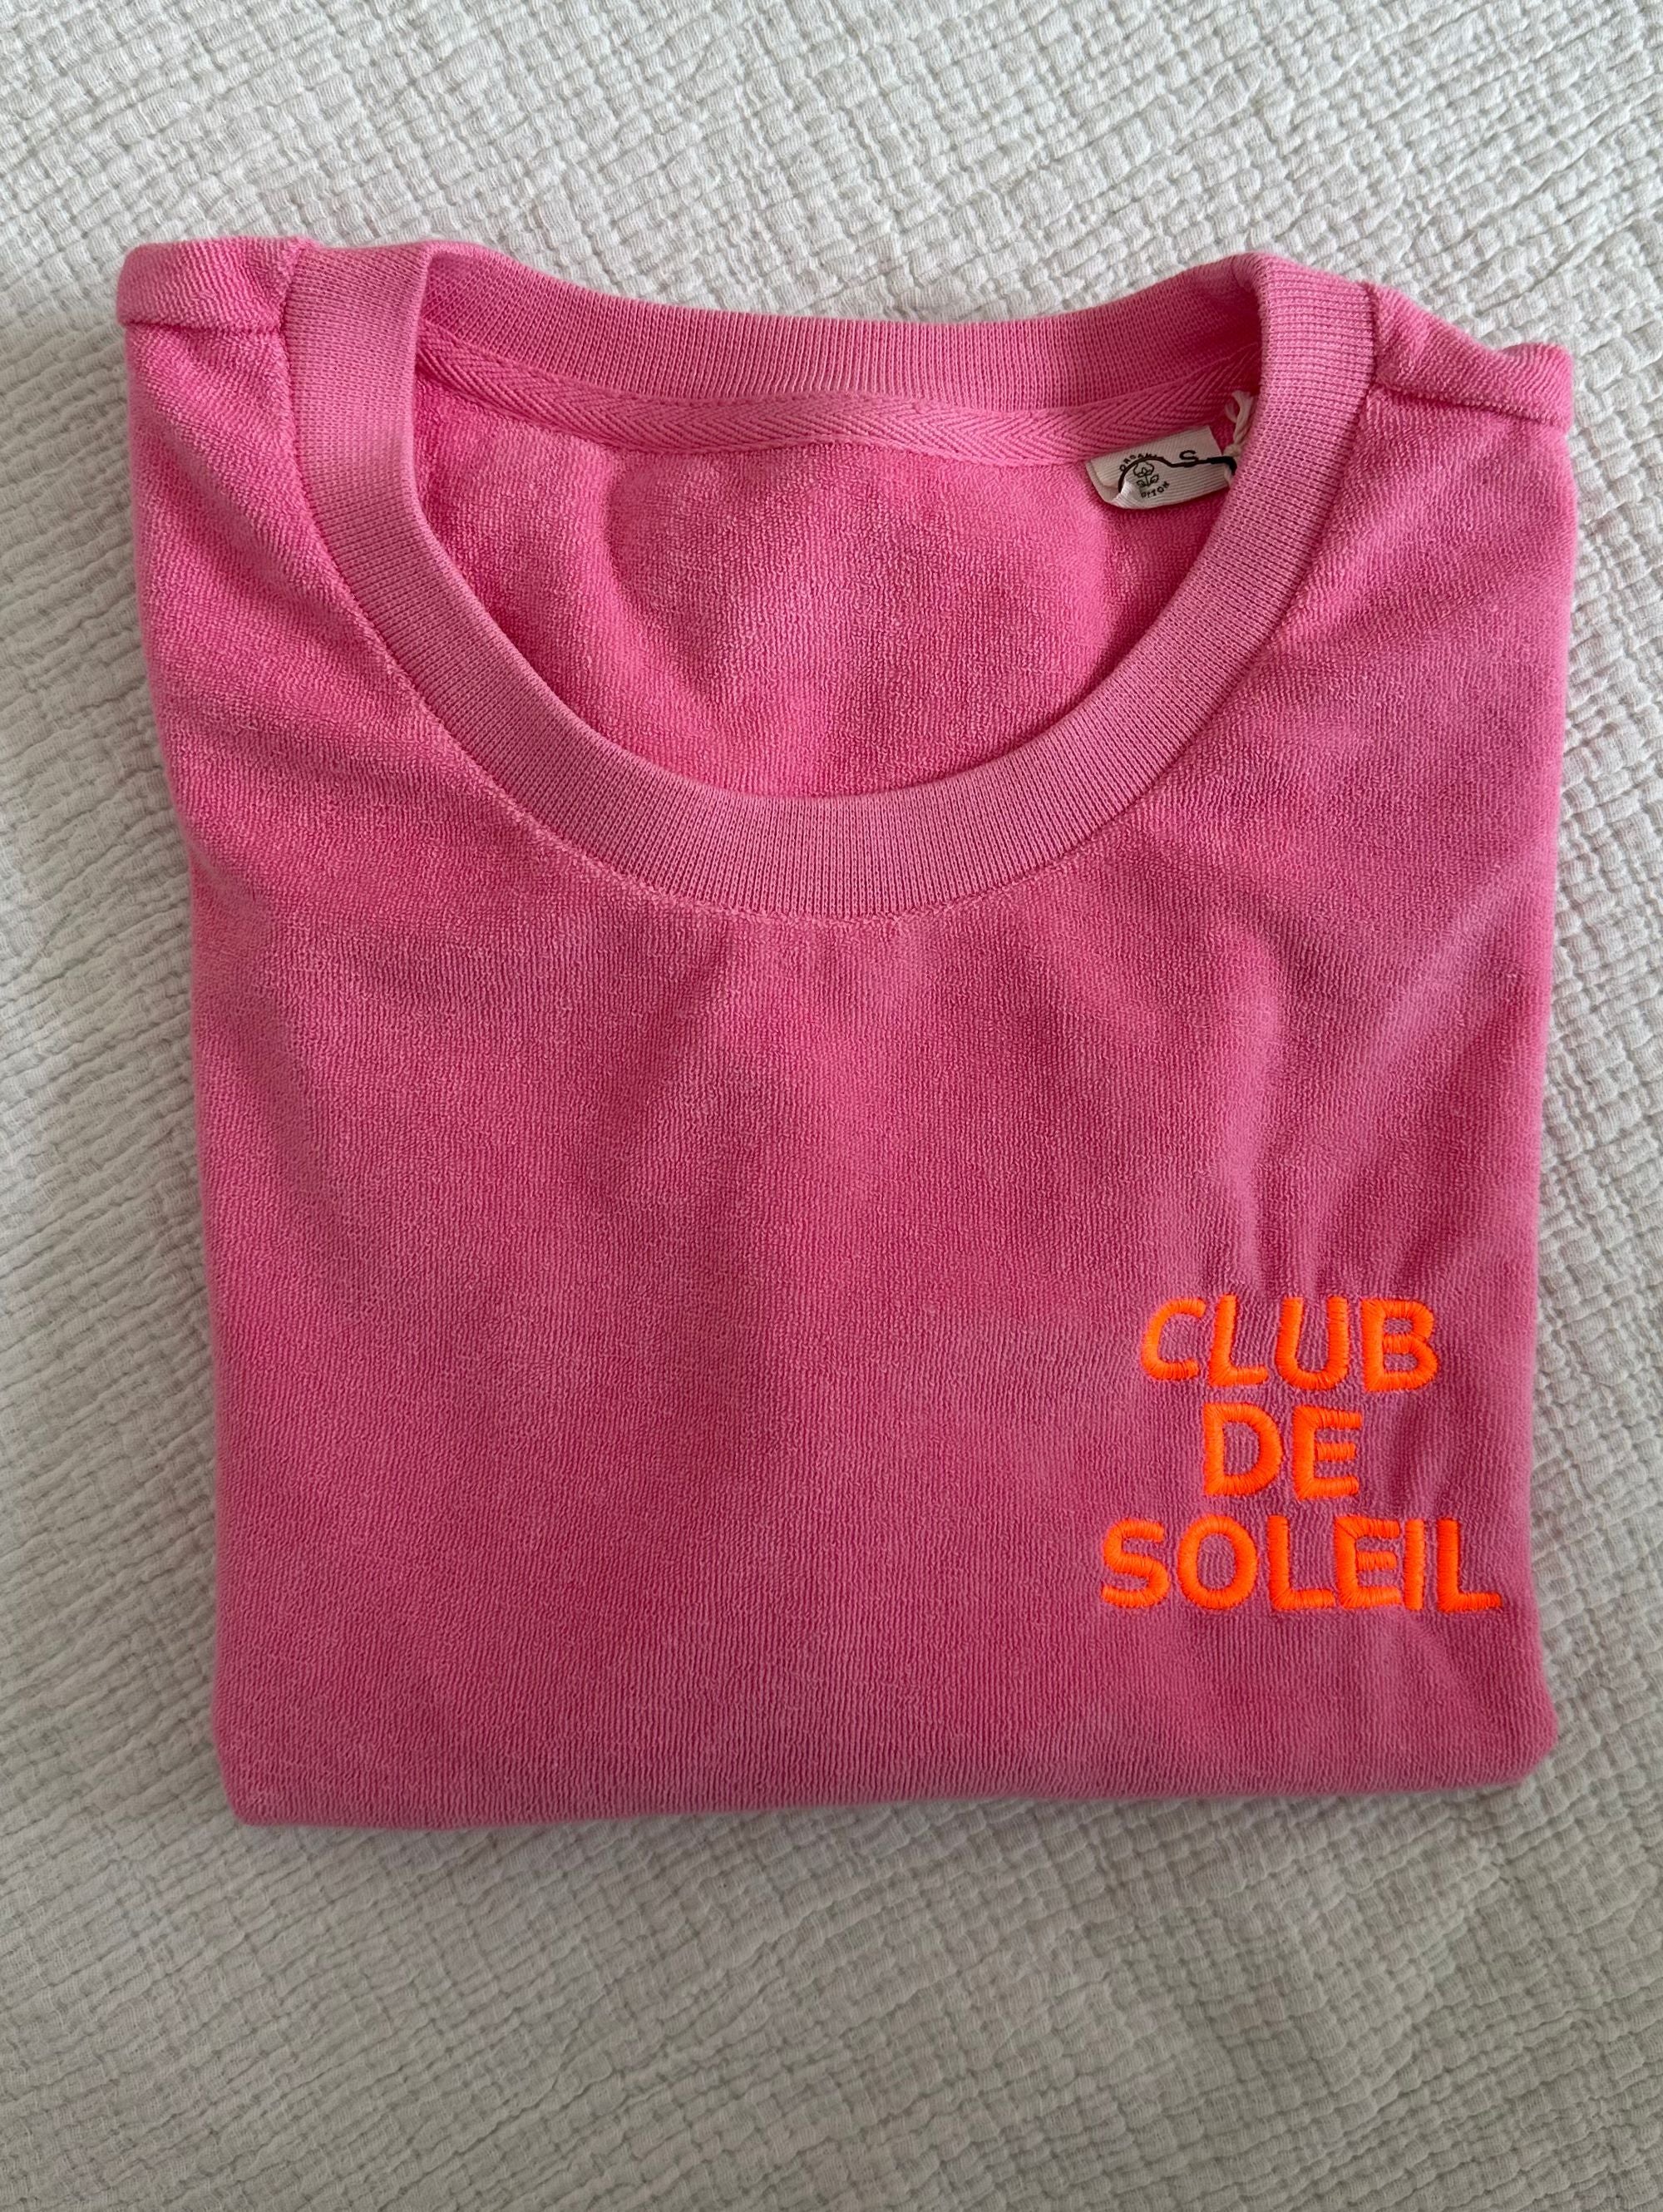 Club de Soleil T-Shirt aus Frottee - Pink/Neon Orange